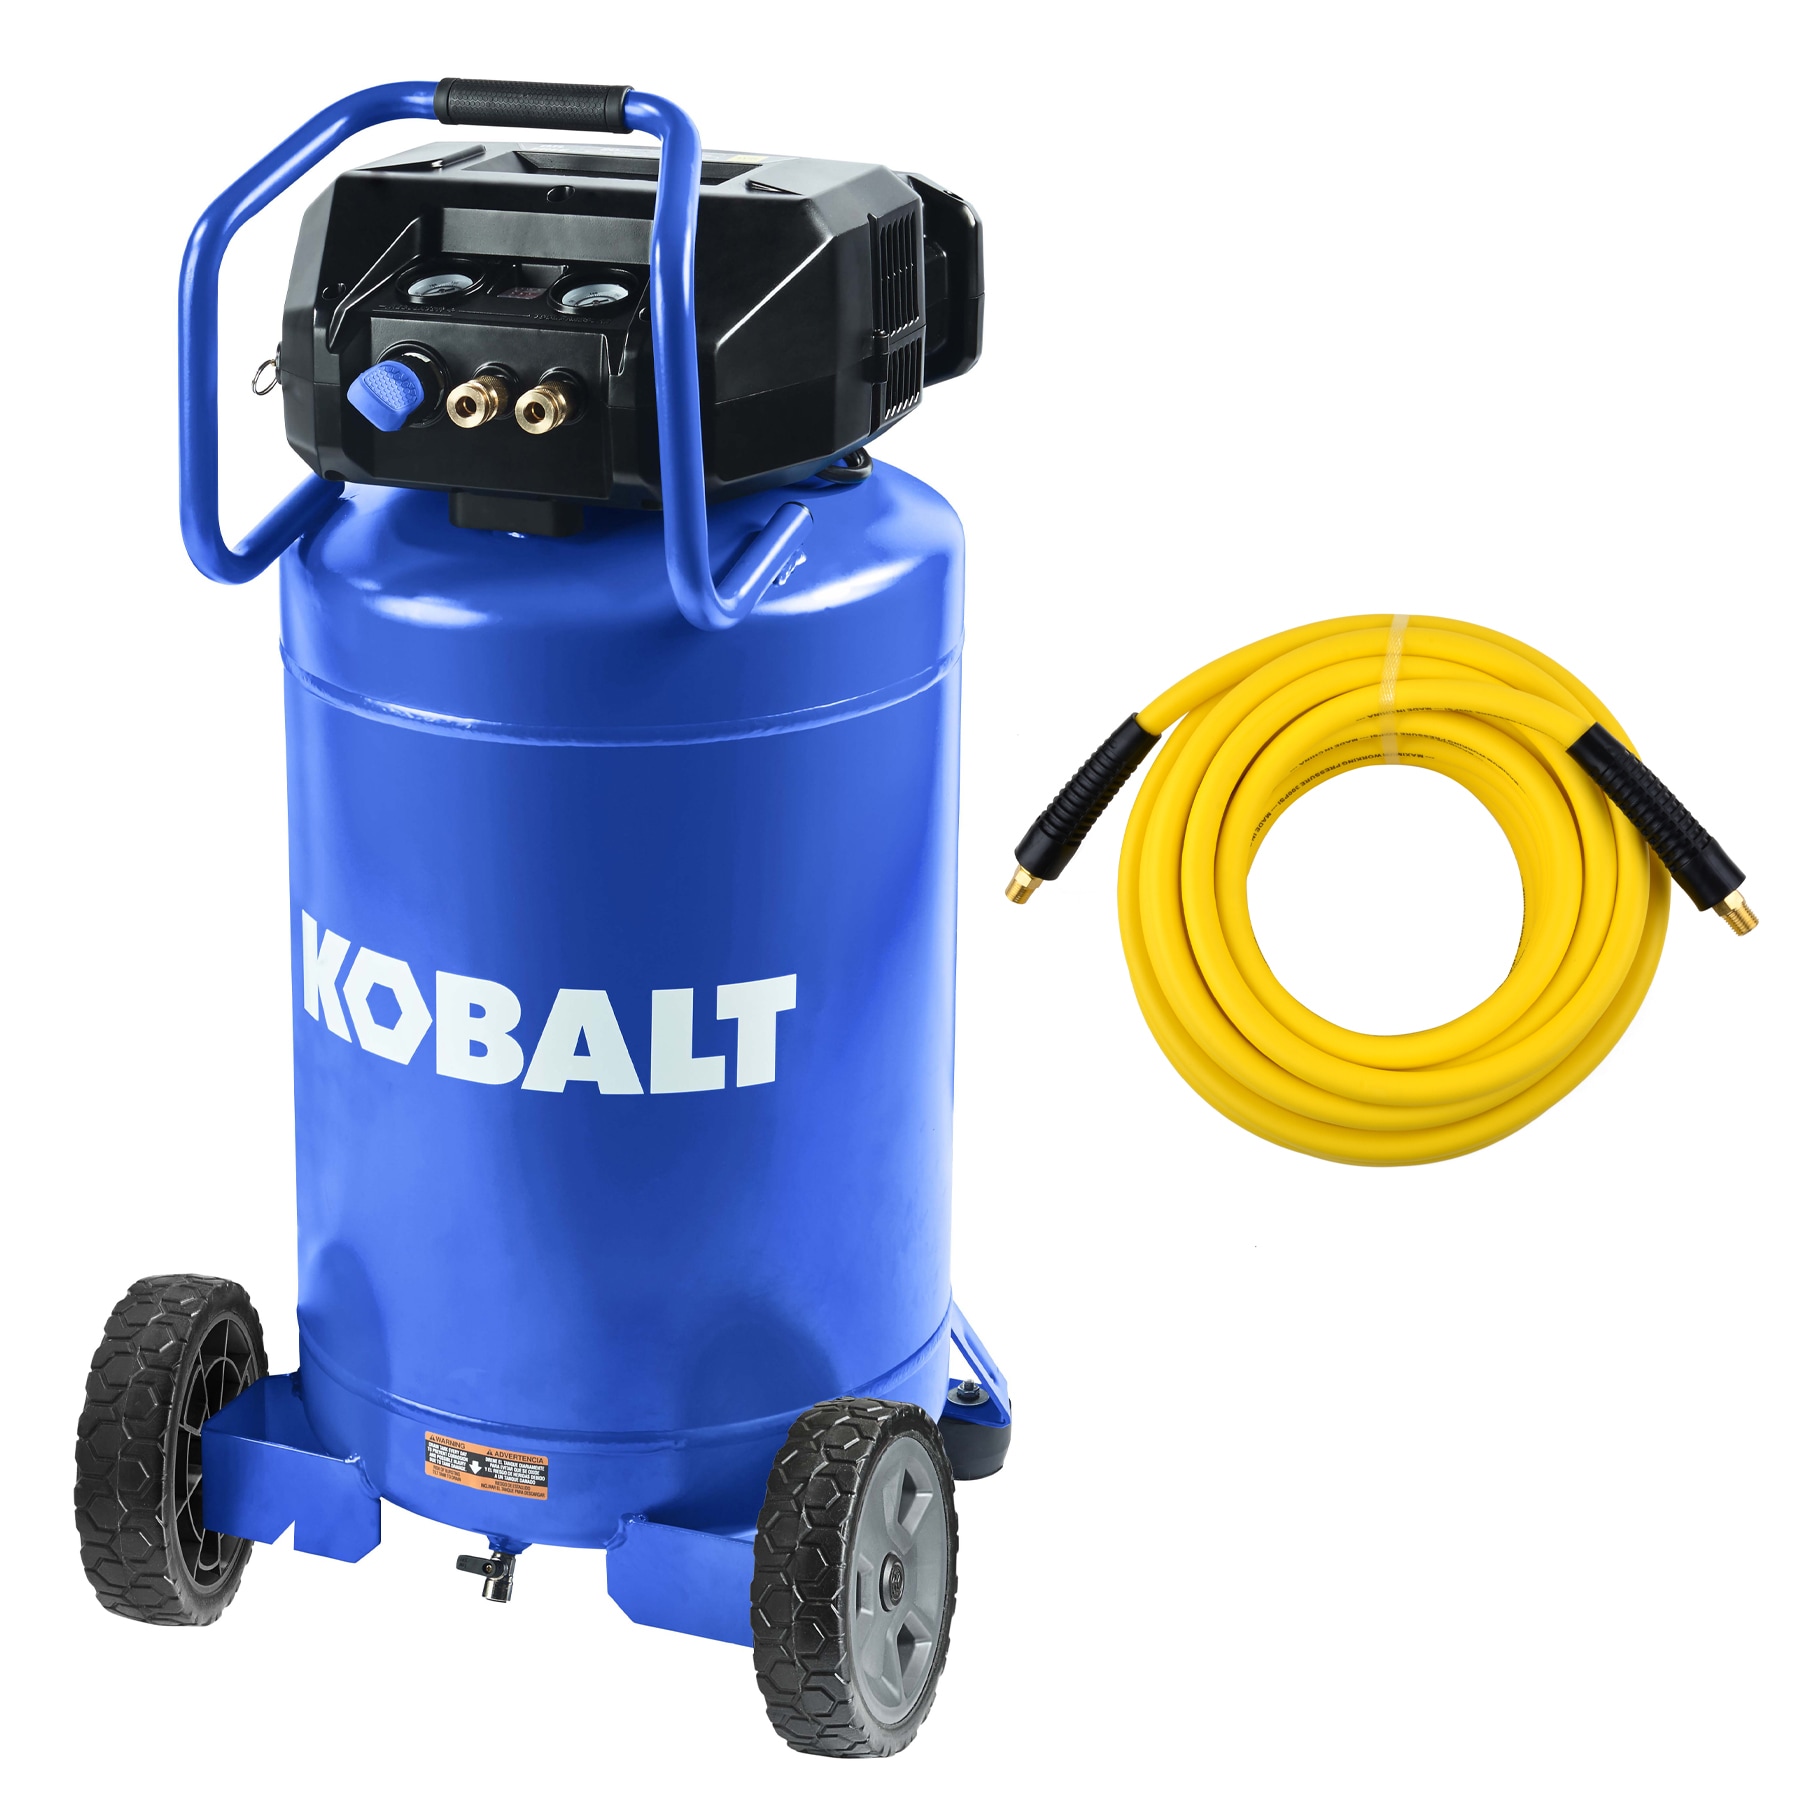 Kobalt 20-Gal Compressor and 3/8-IN x 50-FT Hybrid Air Hose